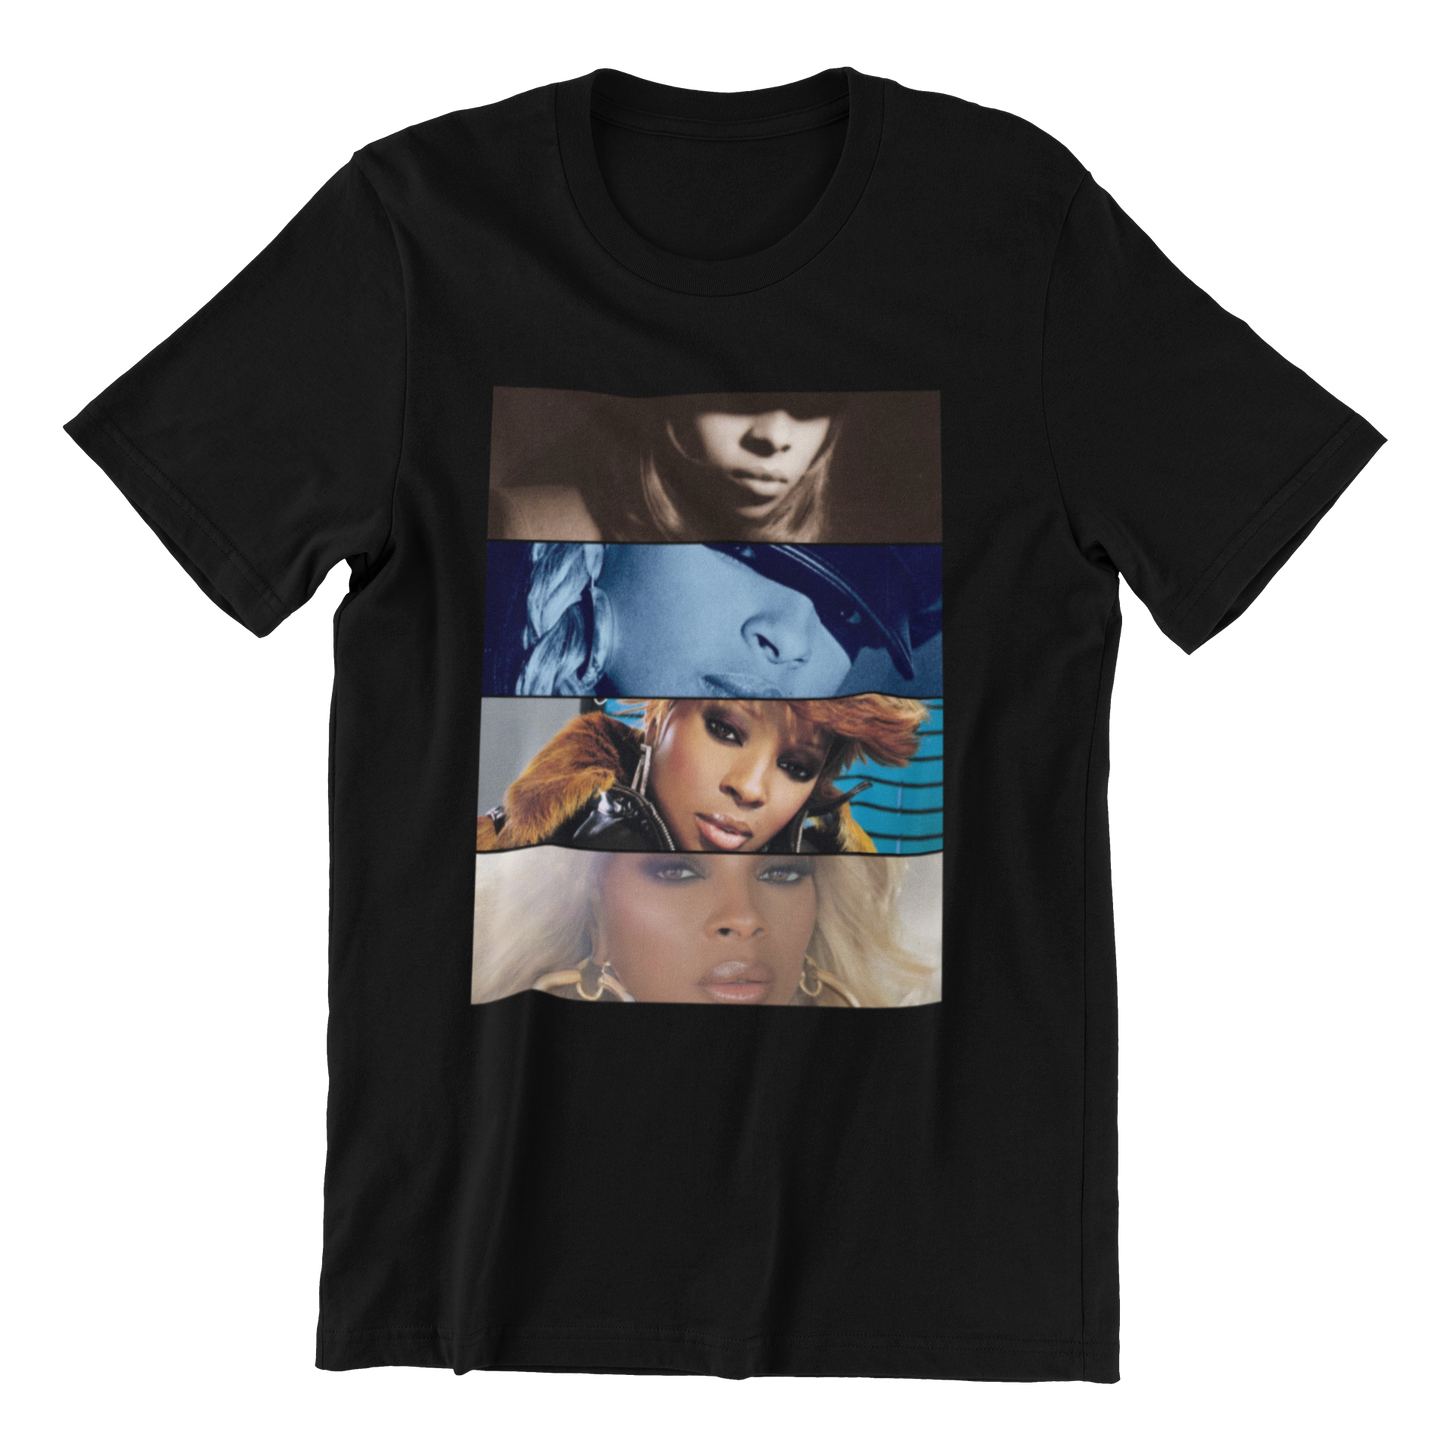 Mary J. Blige, Version 1 (Album Cover Tee)